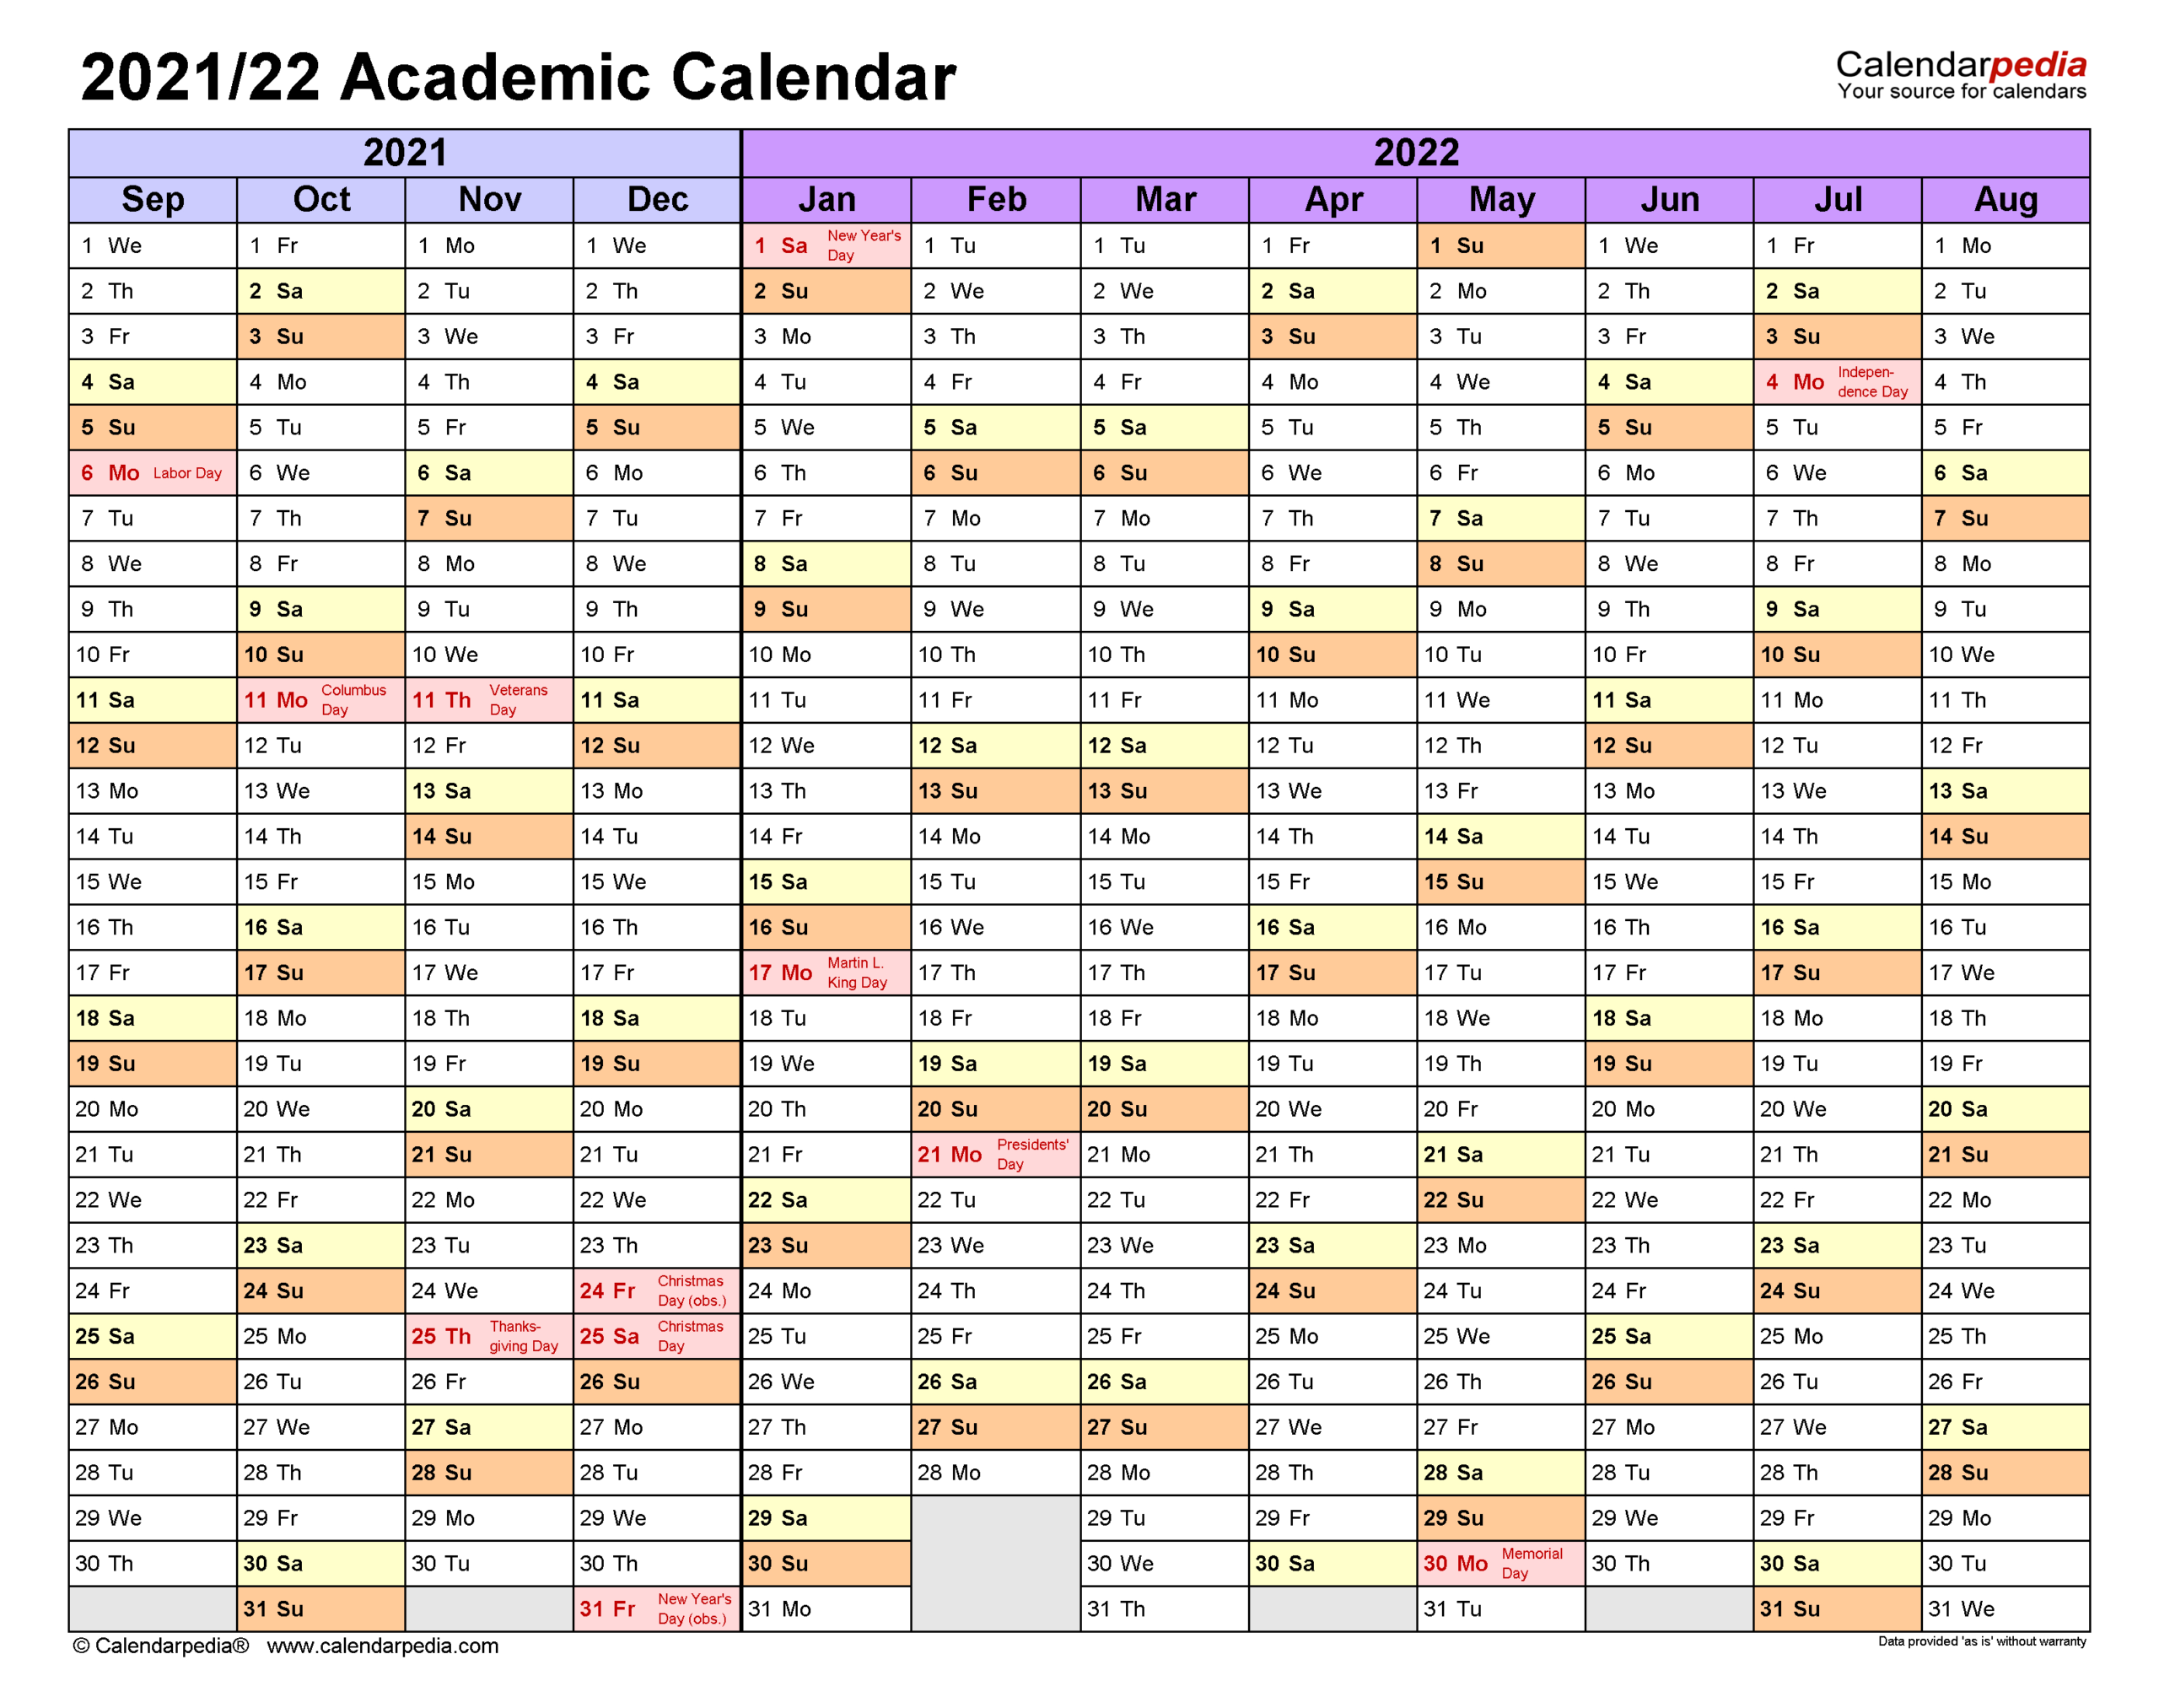 Academic Calendar Template 2021 22 | 2021 Calendar